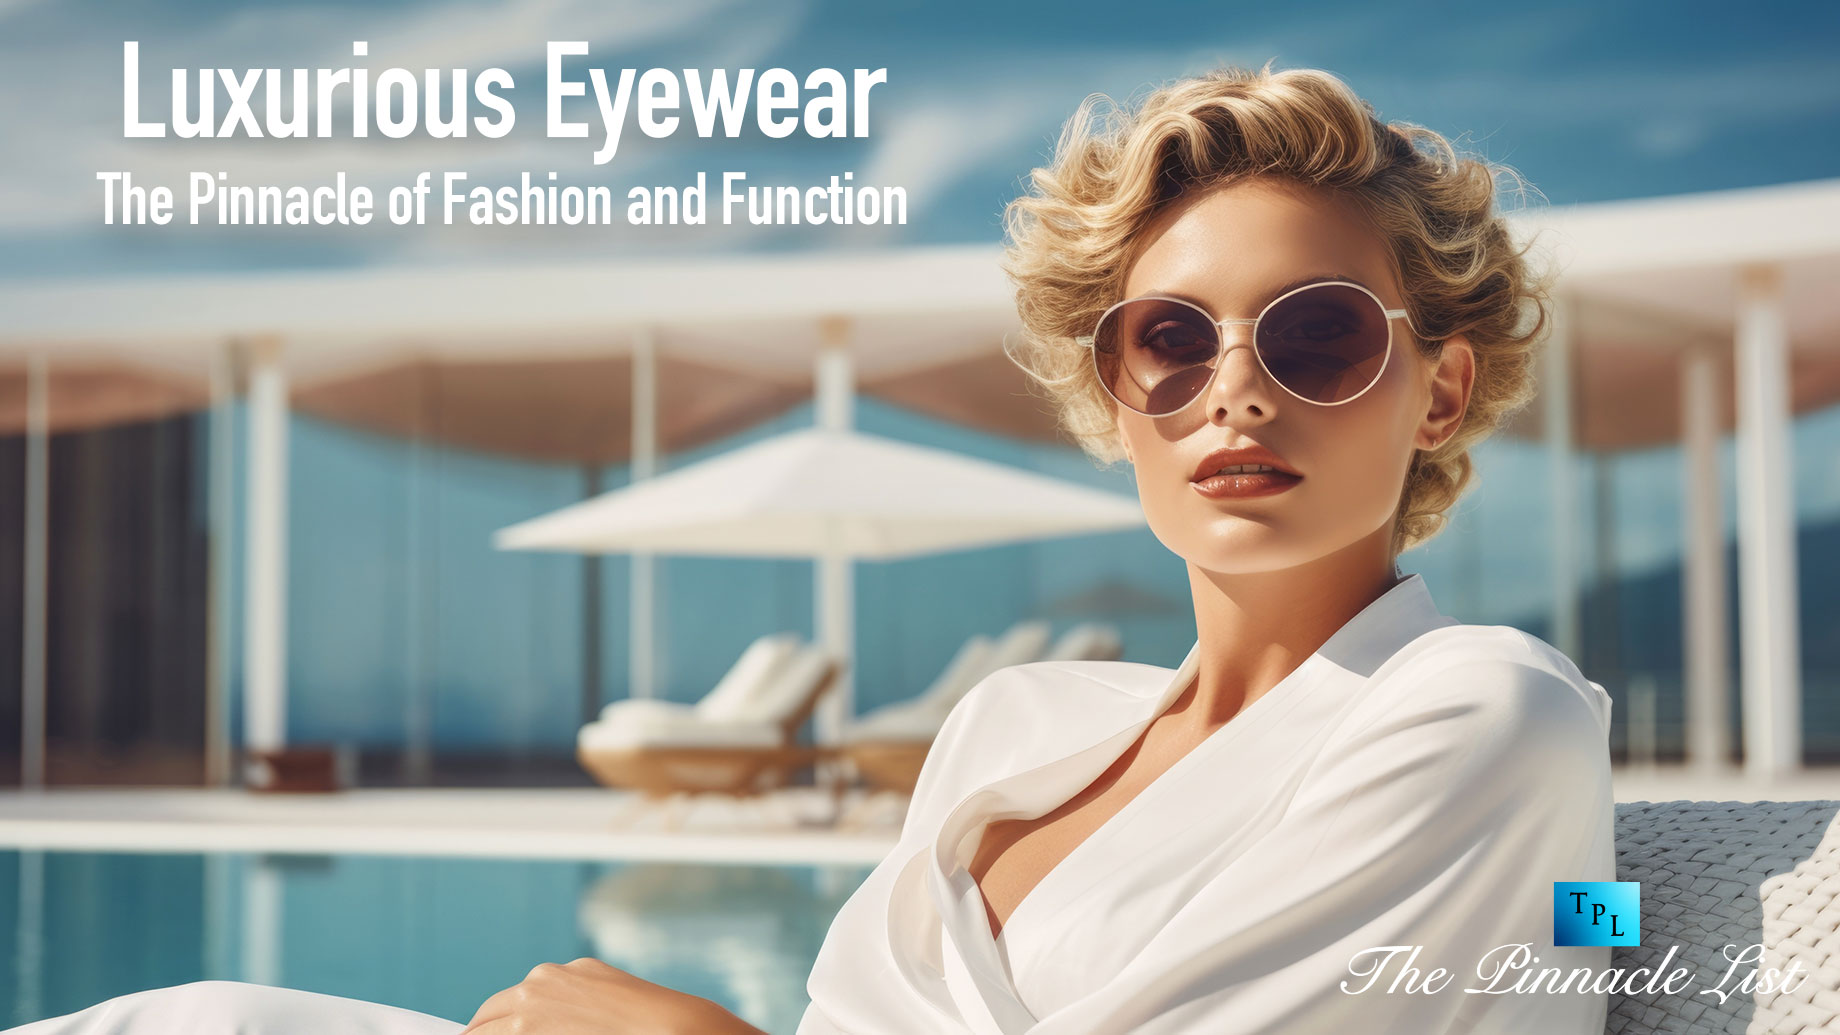 Luxurious Eyewear: The Pinnacle of Fashion and Function